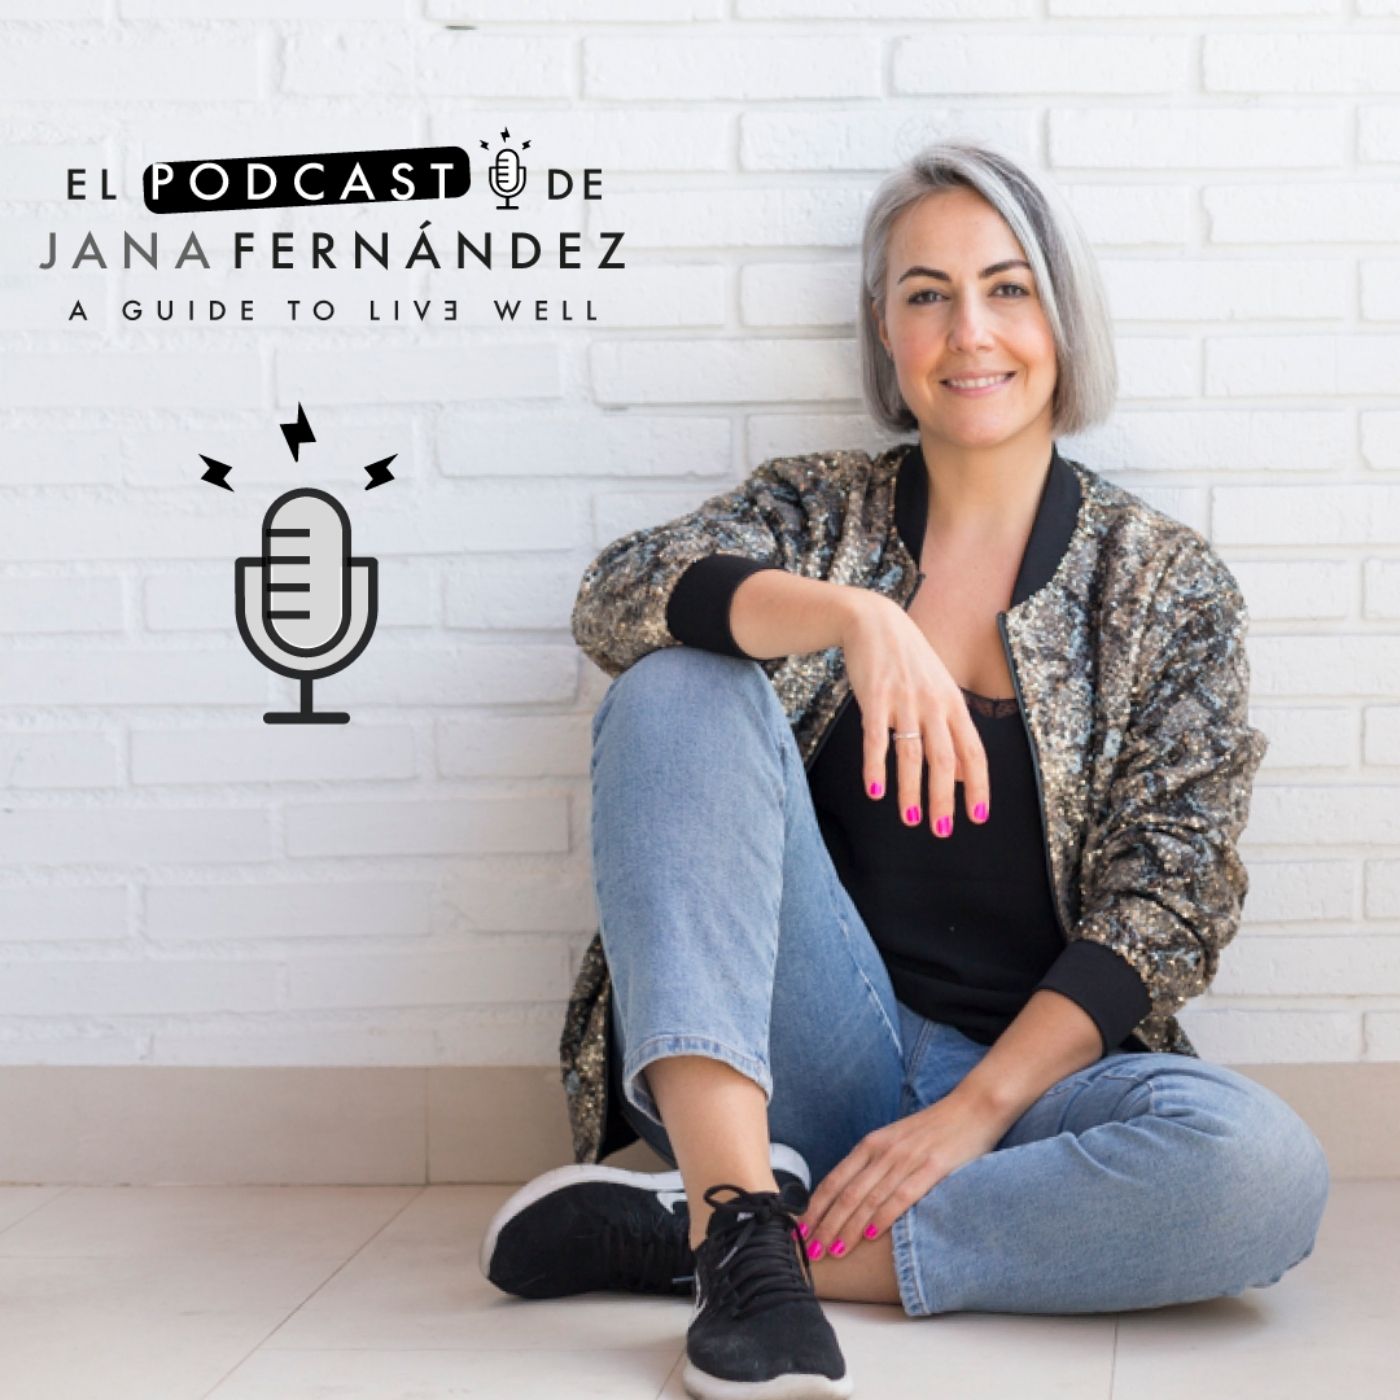 El podcast de Jana Fernández podcast show image